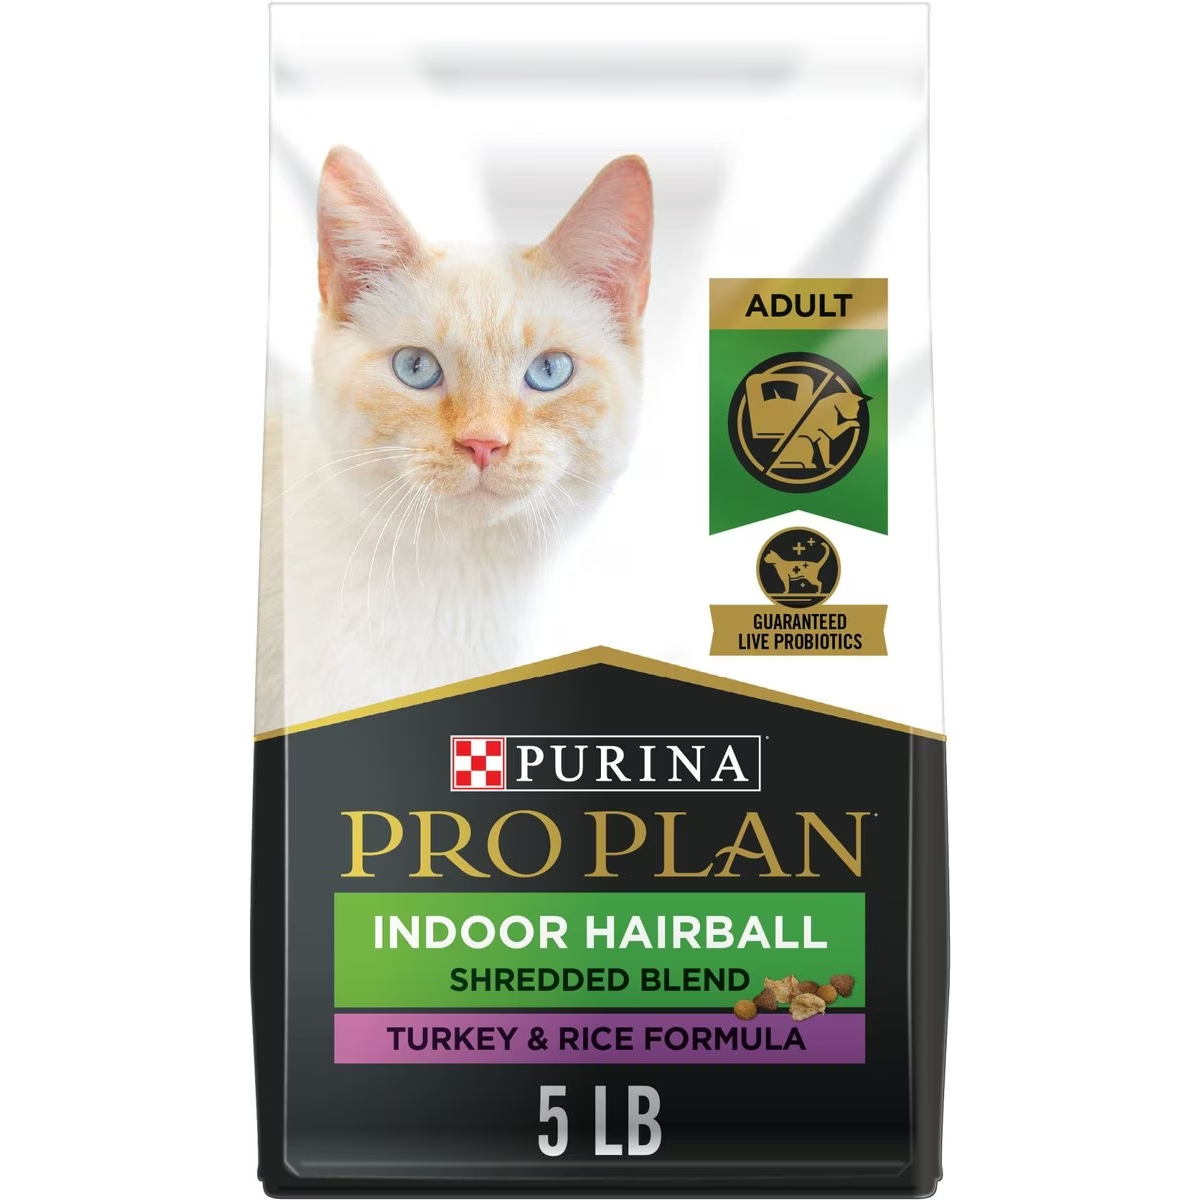 Purina Pro Plan Indoor Hairball Management Shredded Blend Turkey & Rice Formula Dry Cat Food